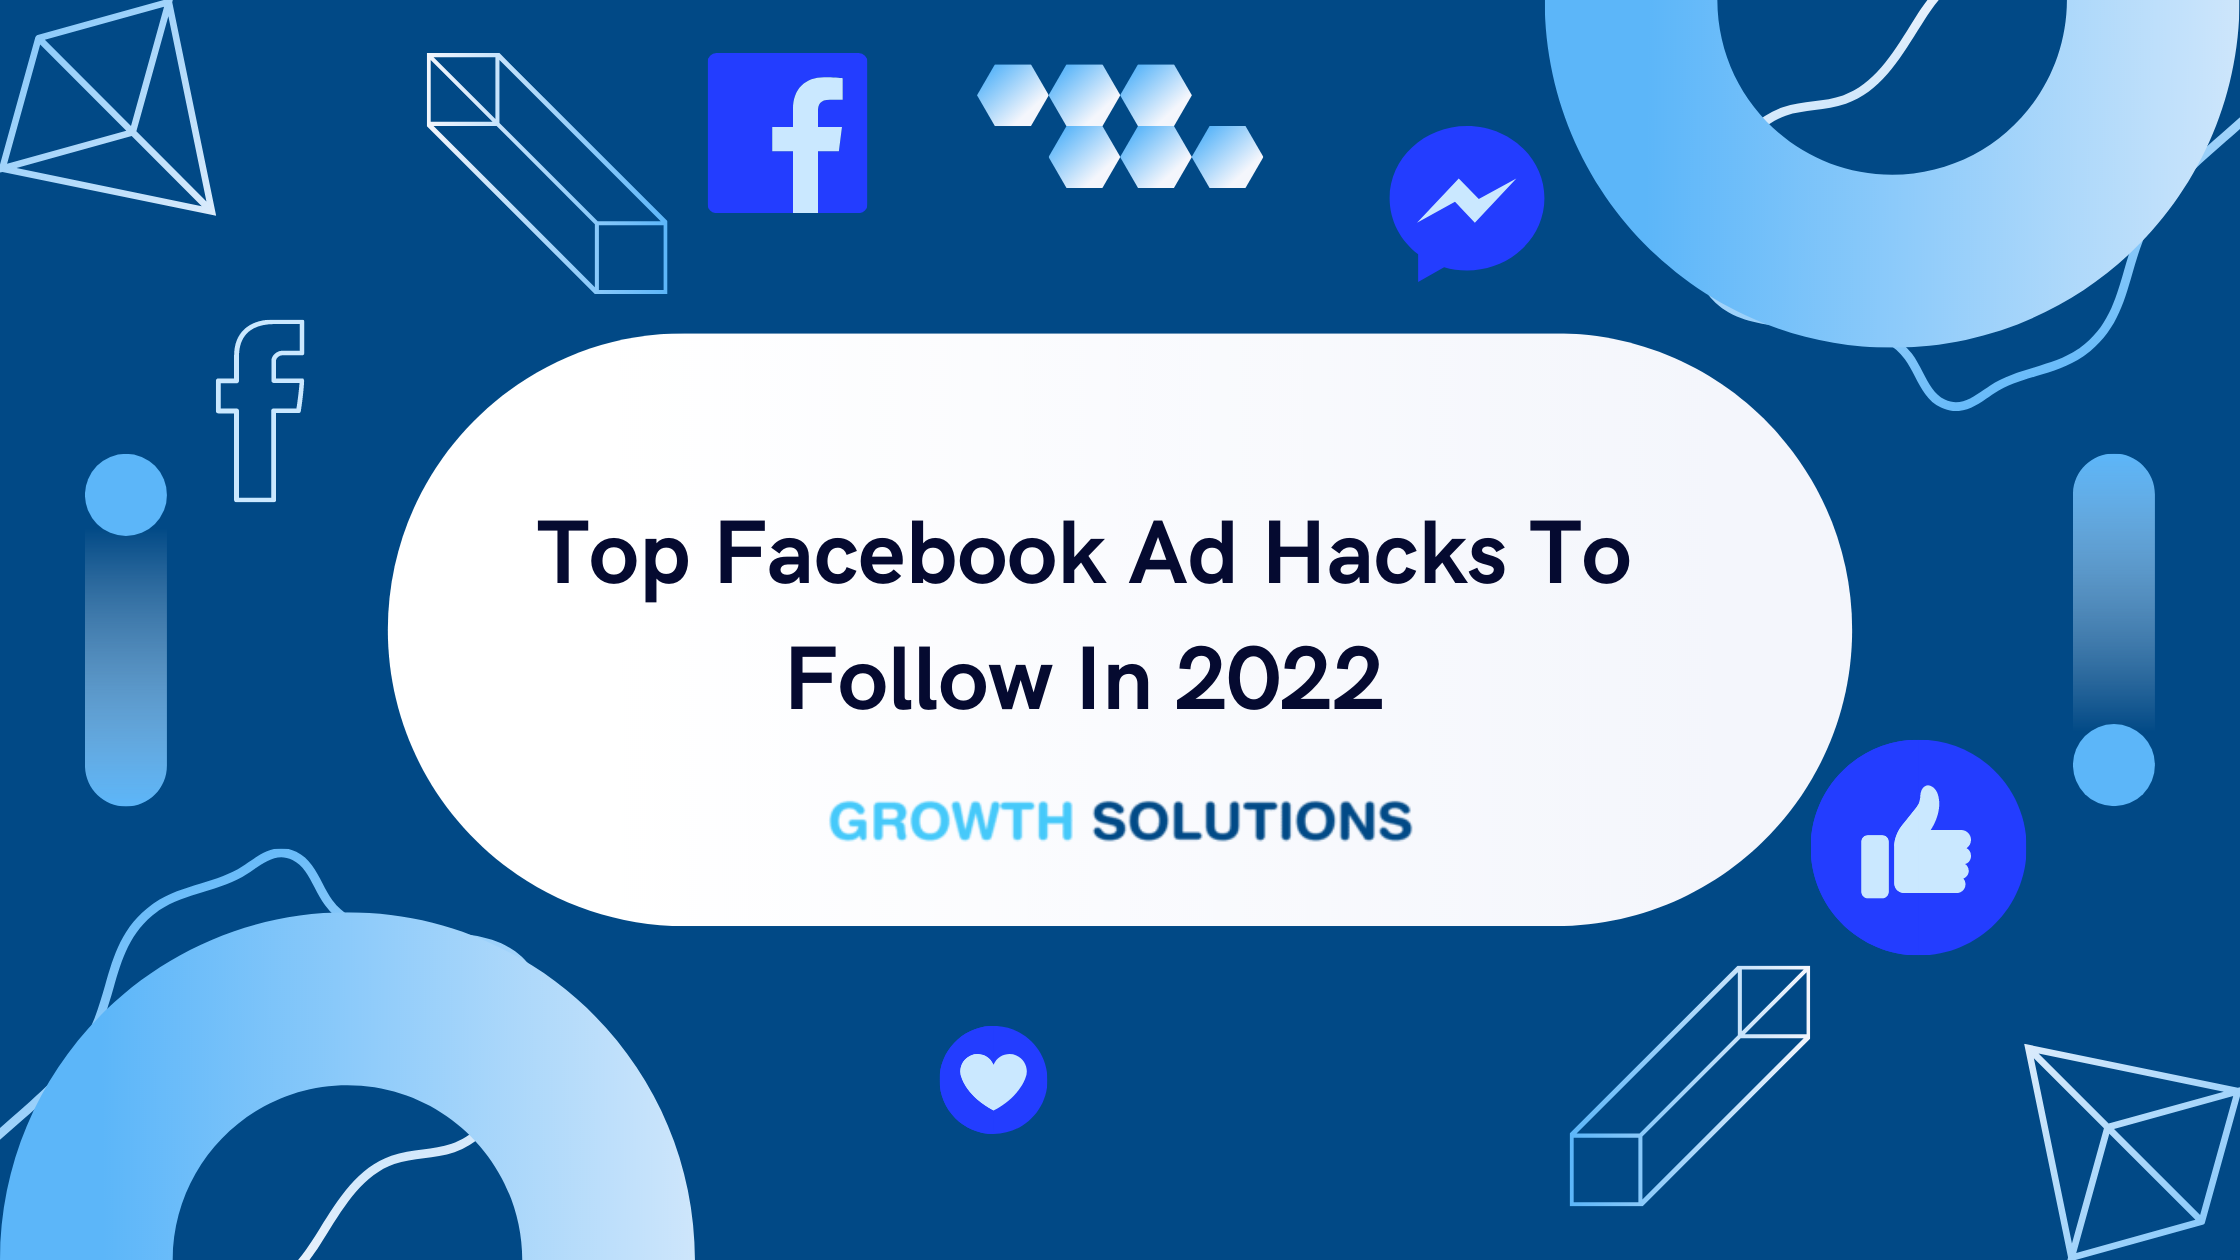 Top Facebook Ad Hacks To Follow In 2022